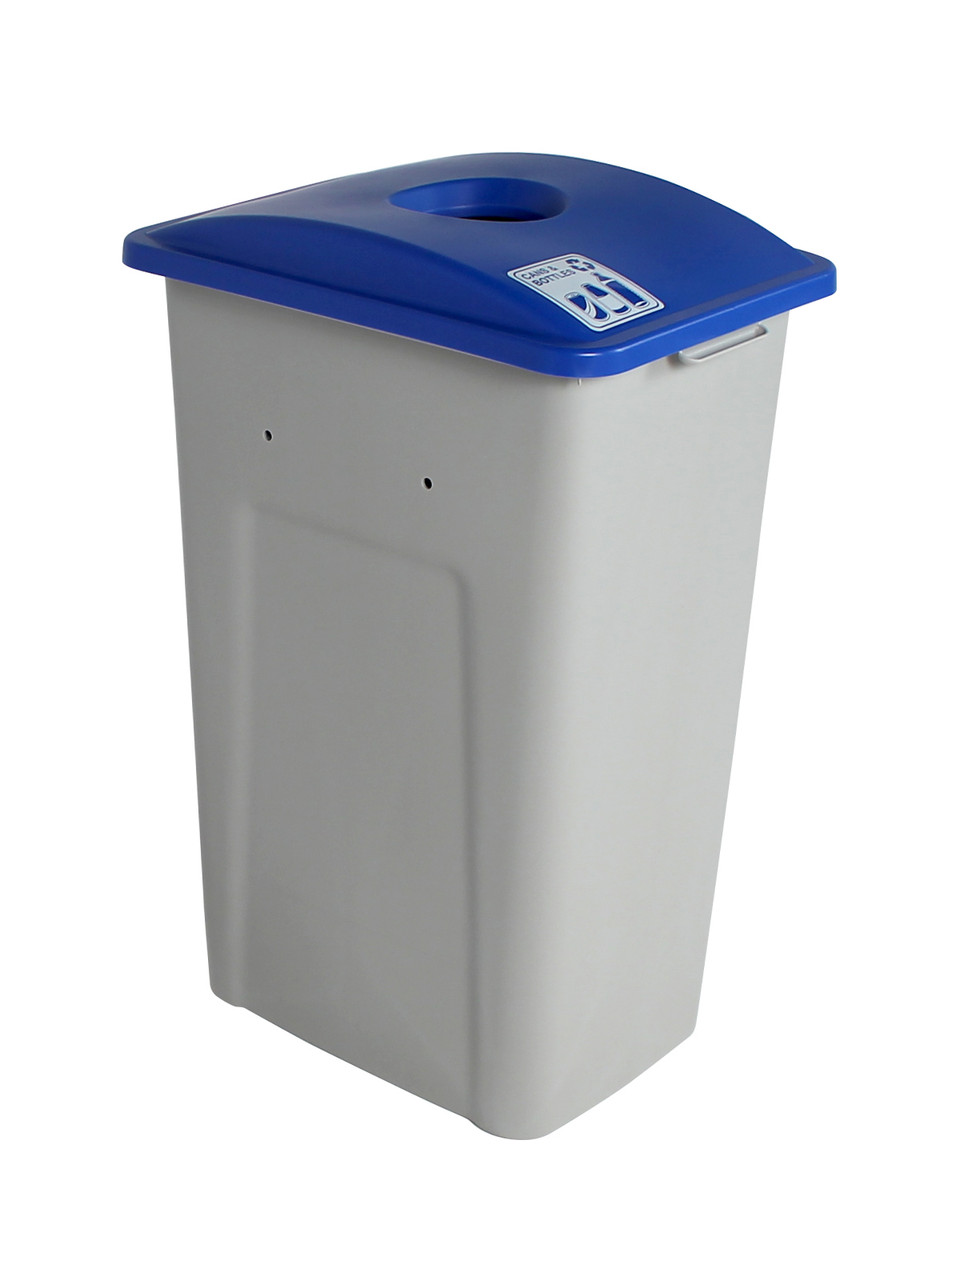 32 Gallon XL Simple Sort Recycling Bin (Cans & Bottles, Blue Lid)